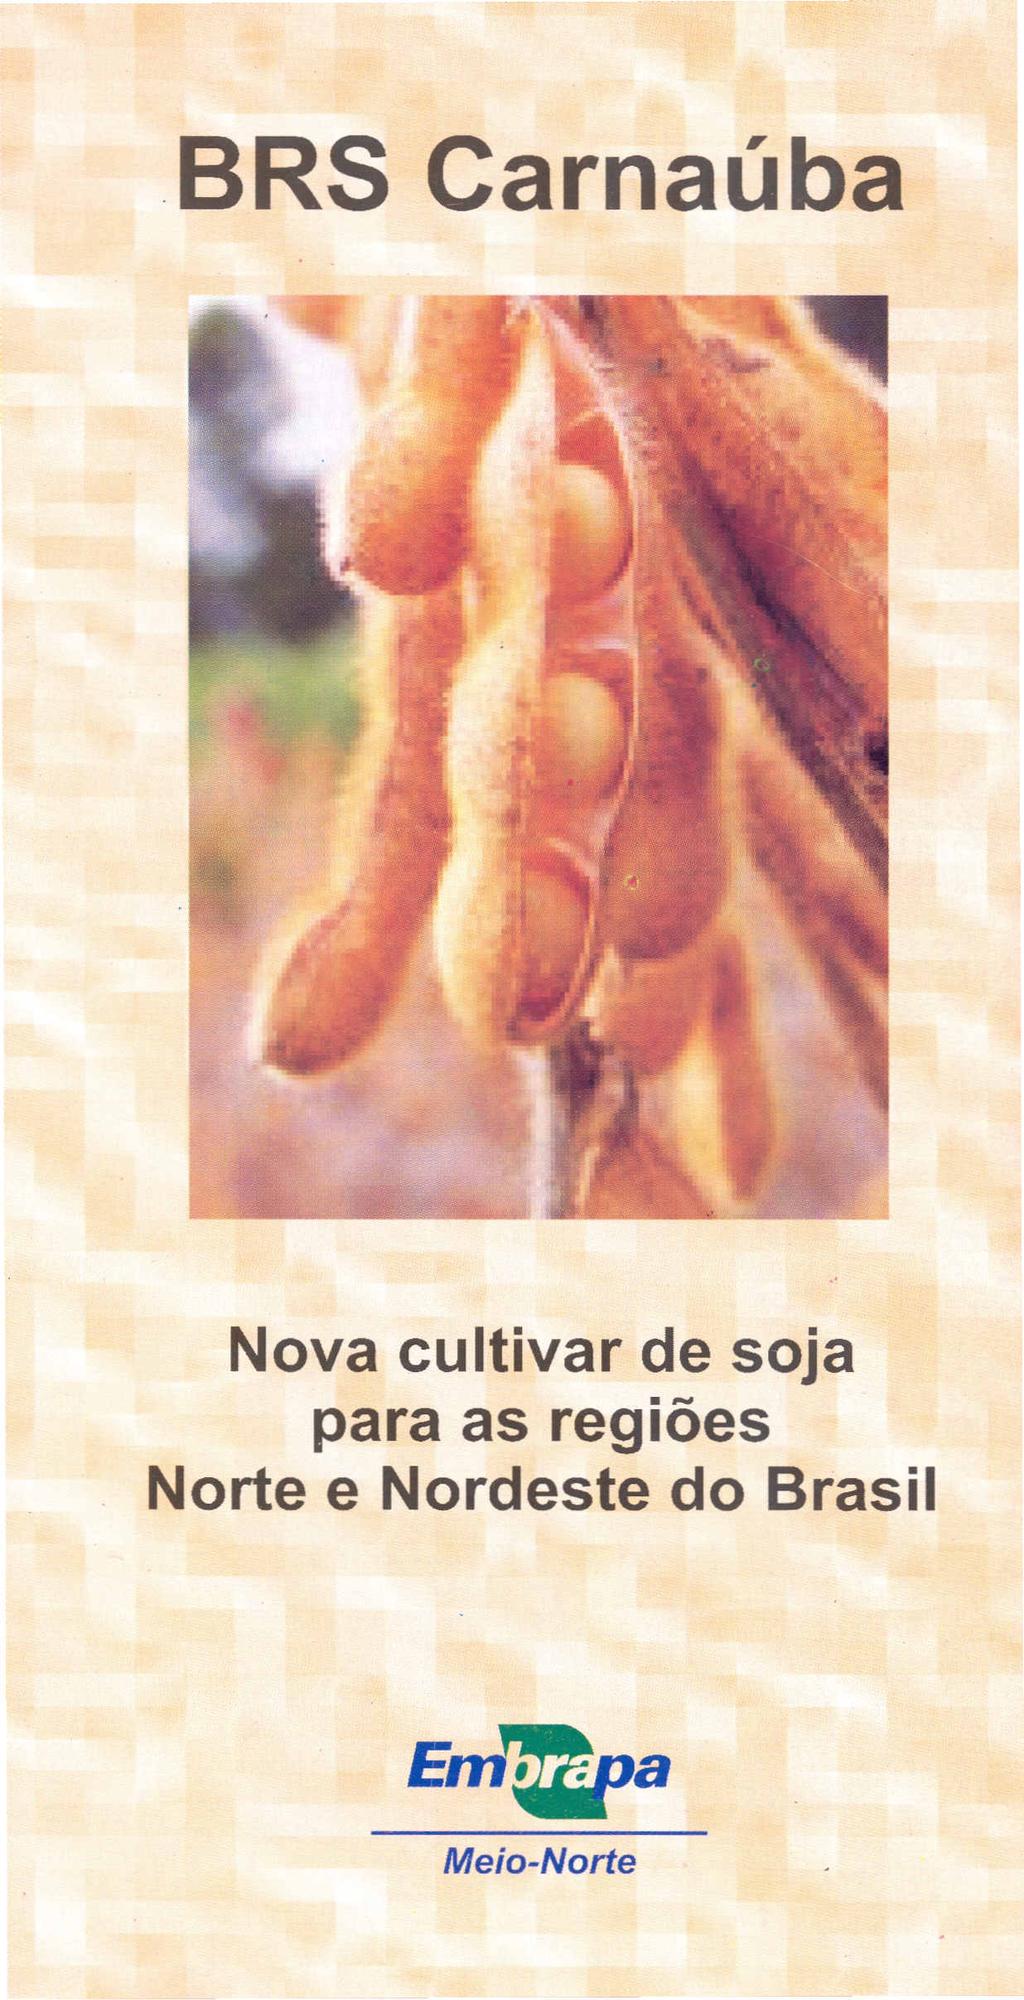 BRS Carnauba Nova cultivar de soja